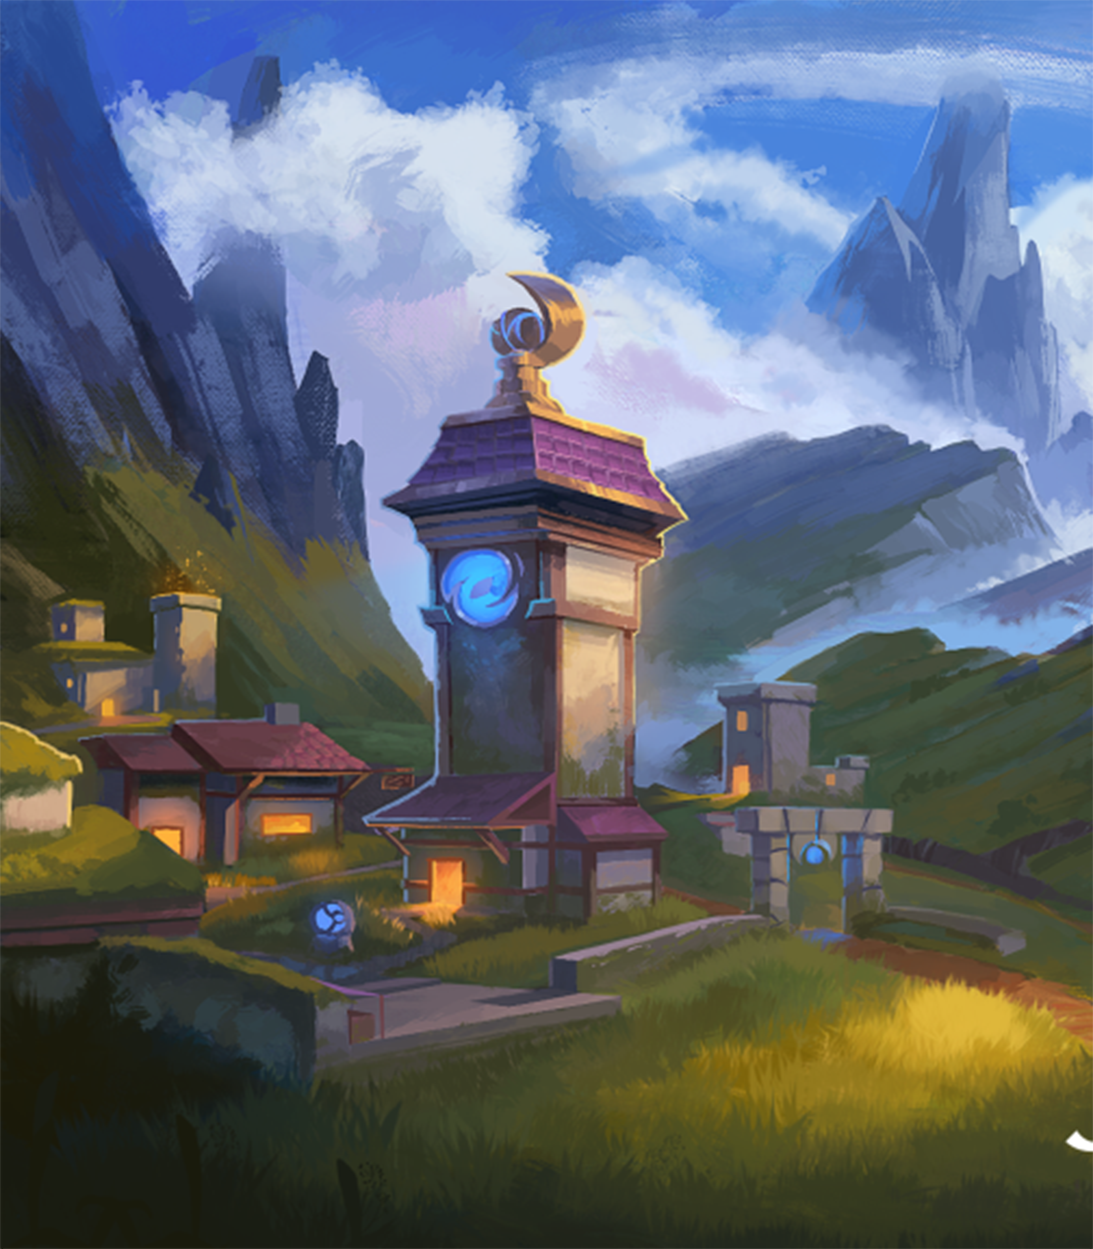 A fantasy town beneath mountains.